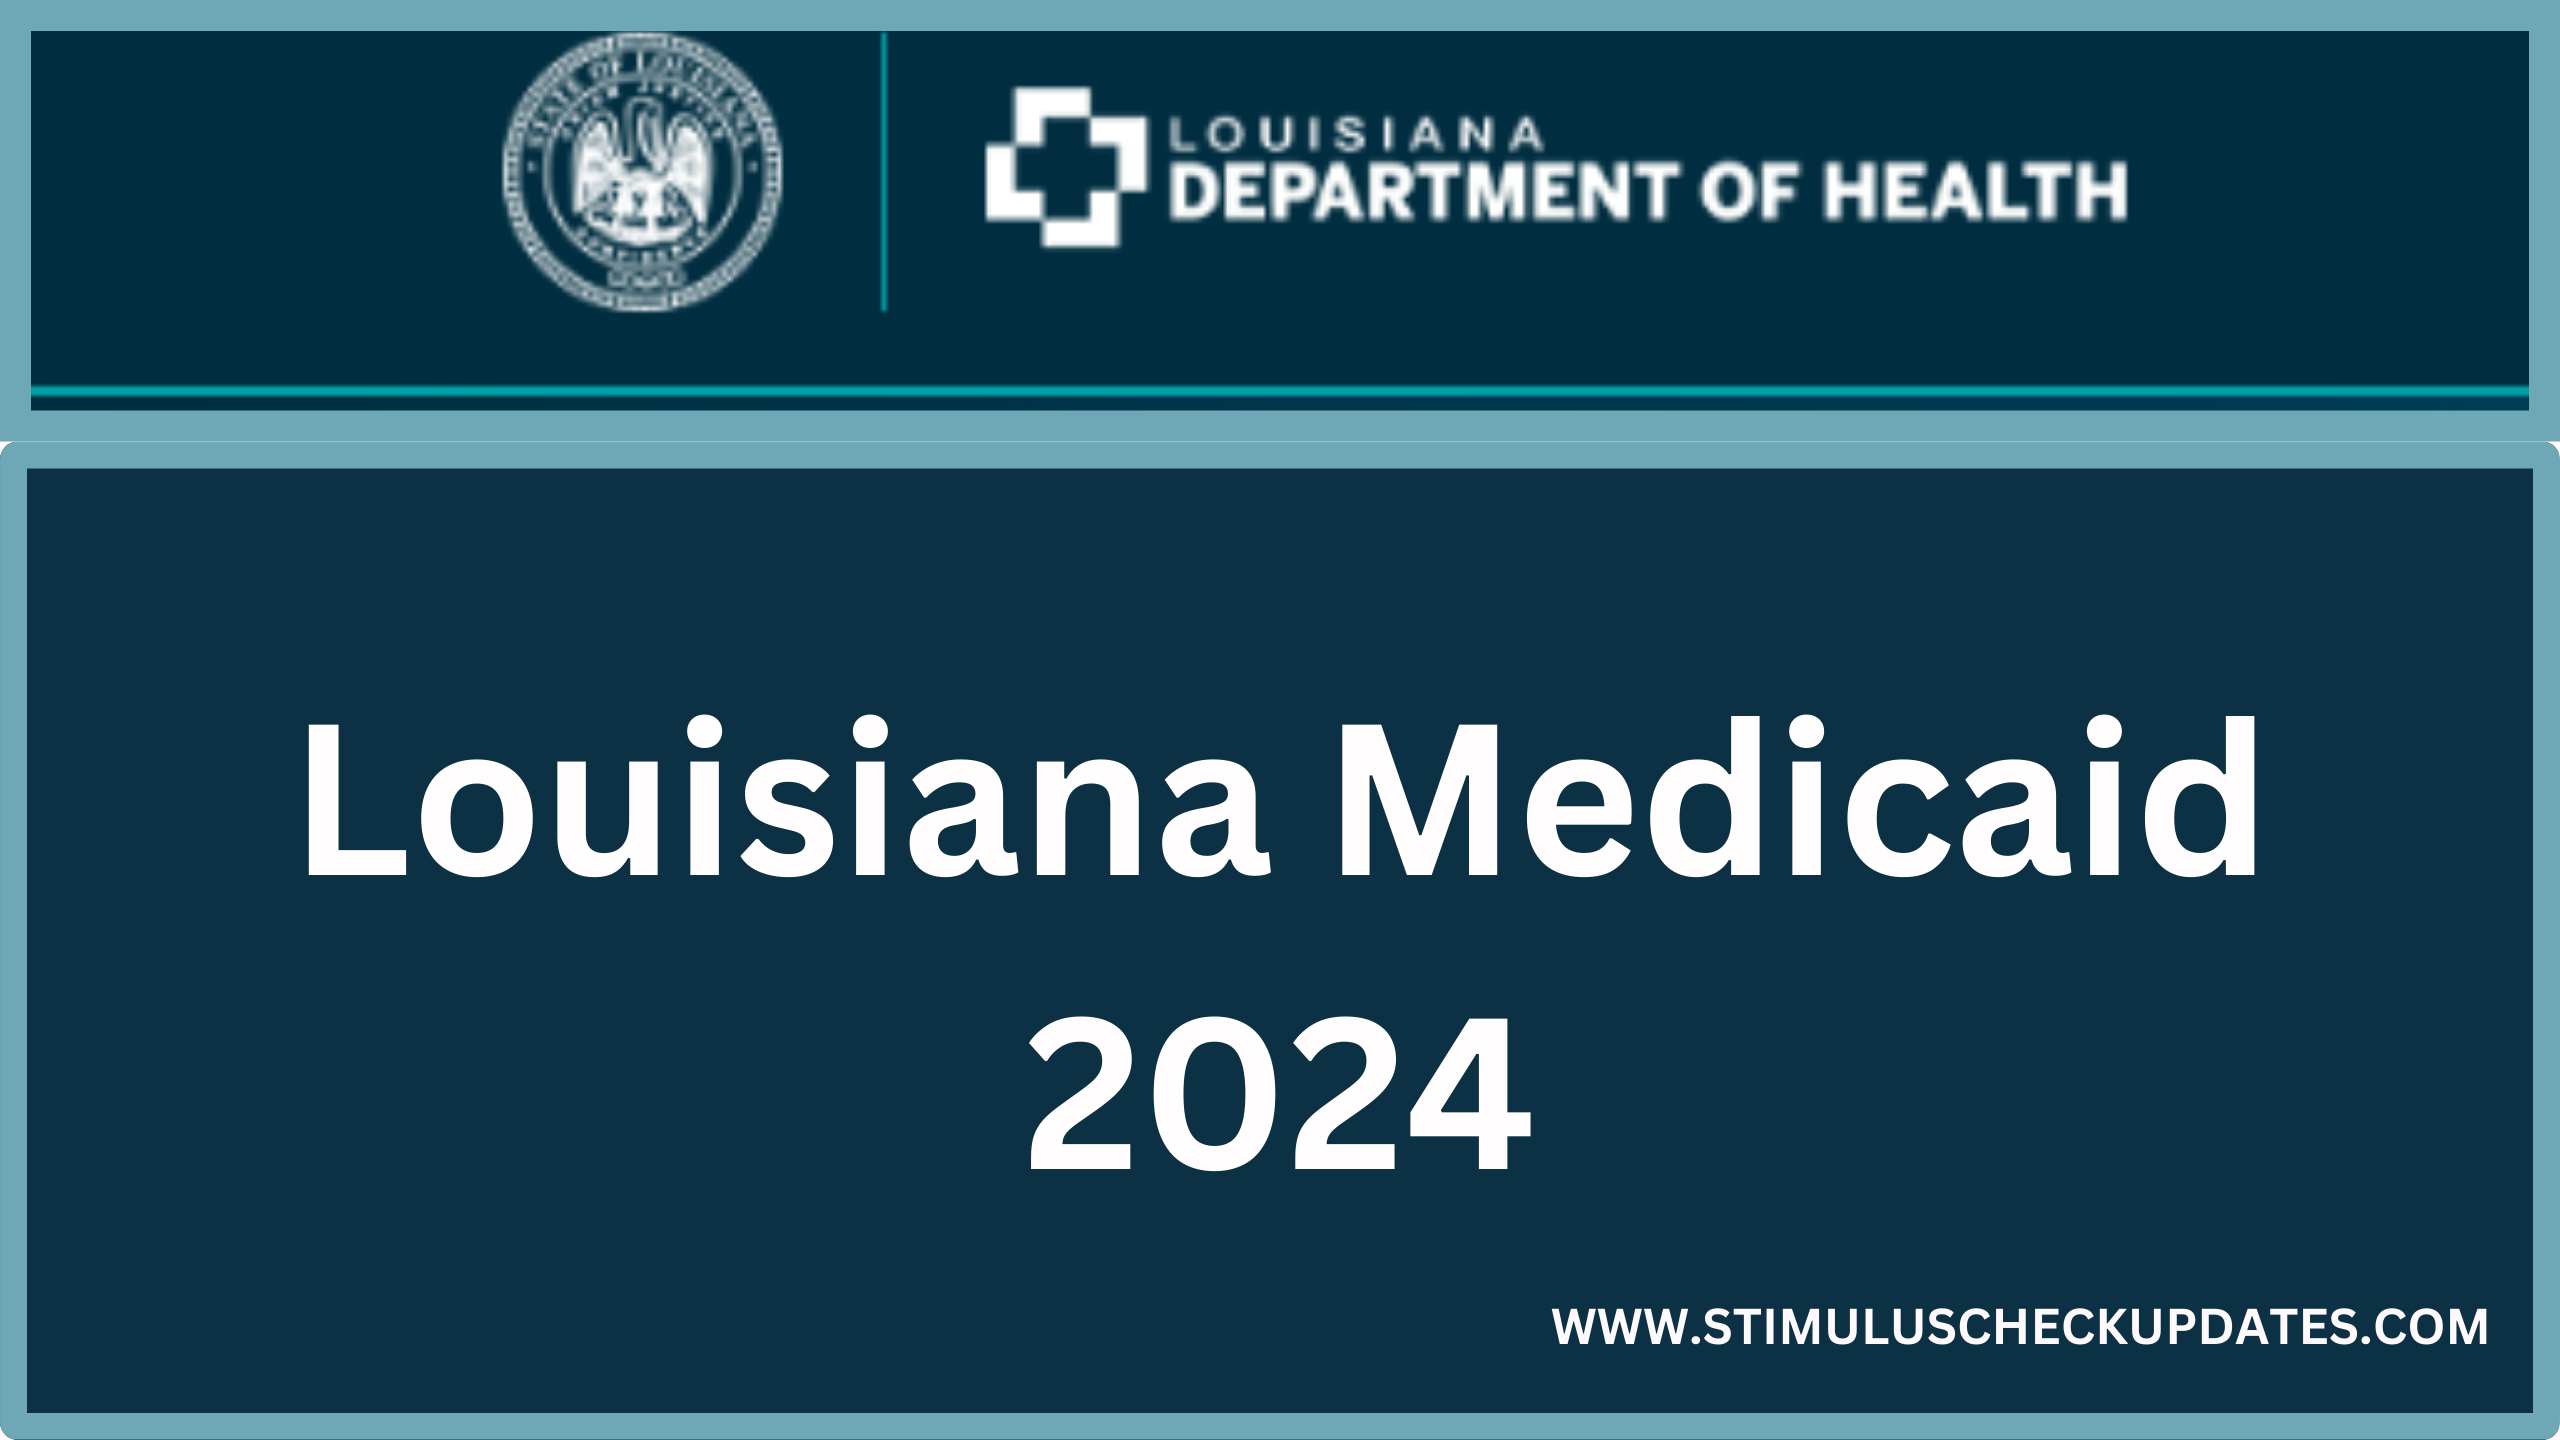 Louisiana Medicaid Coverage, Eligibility, Application 2024